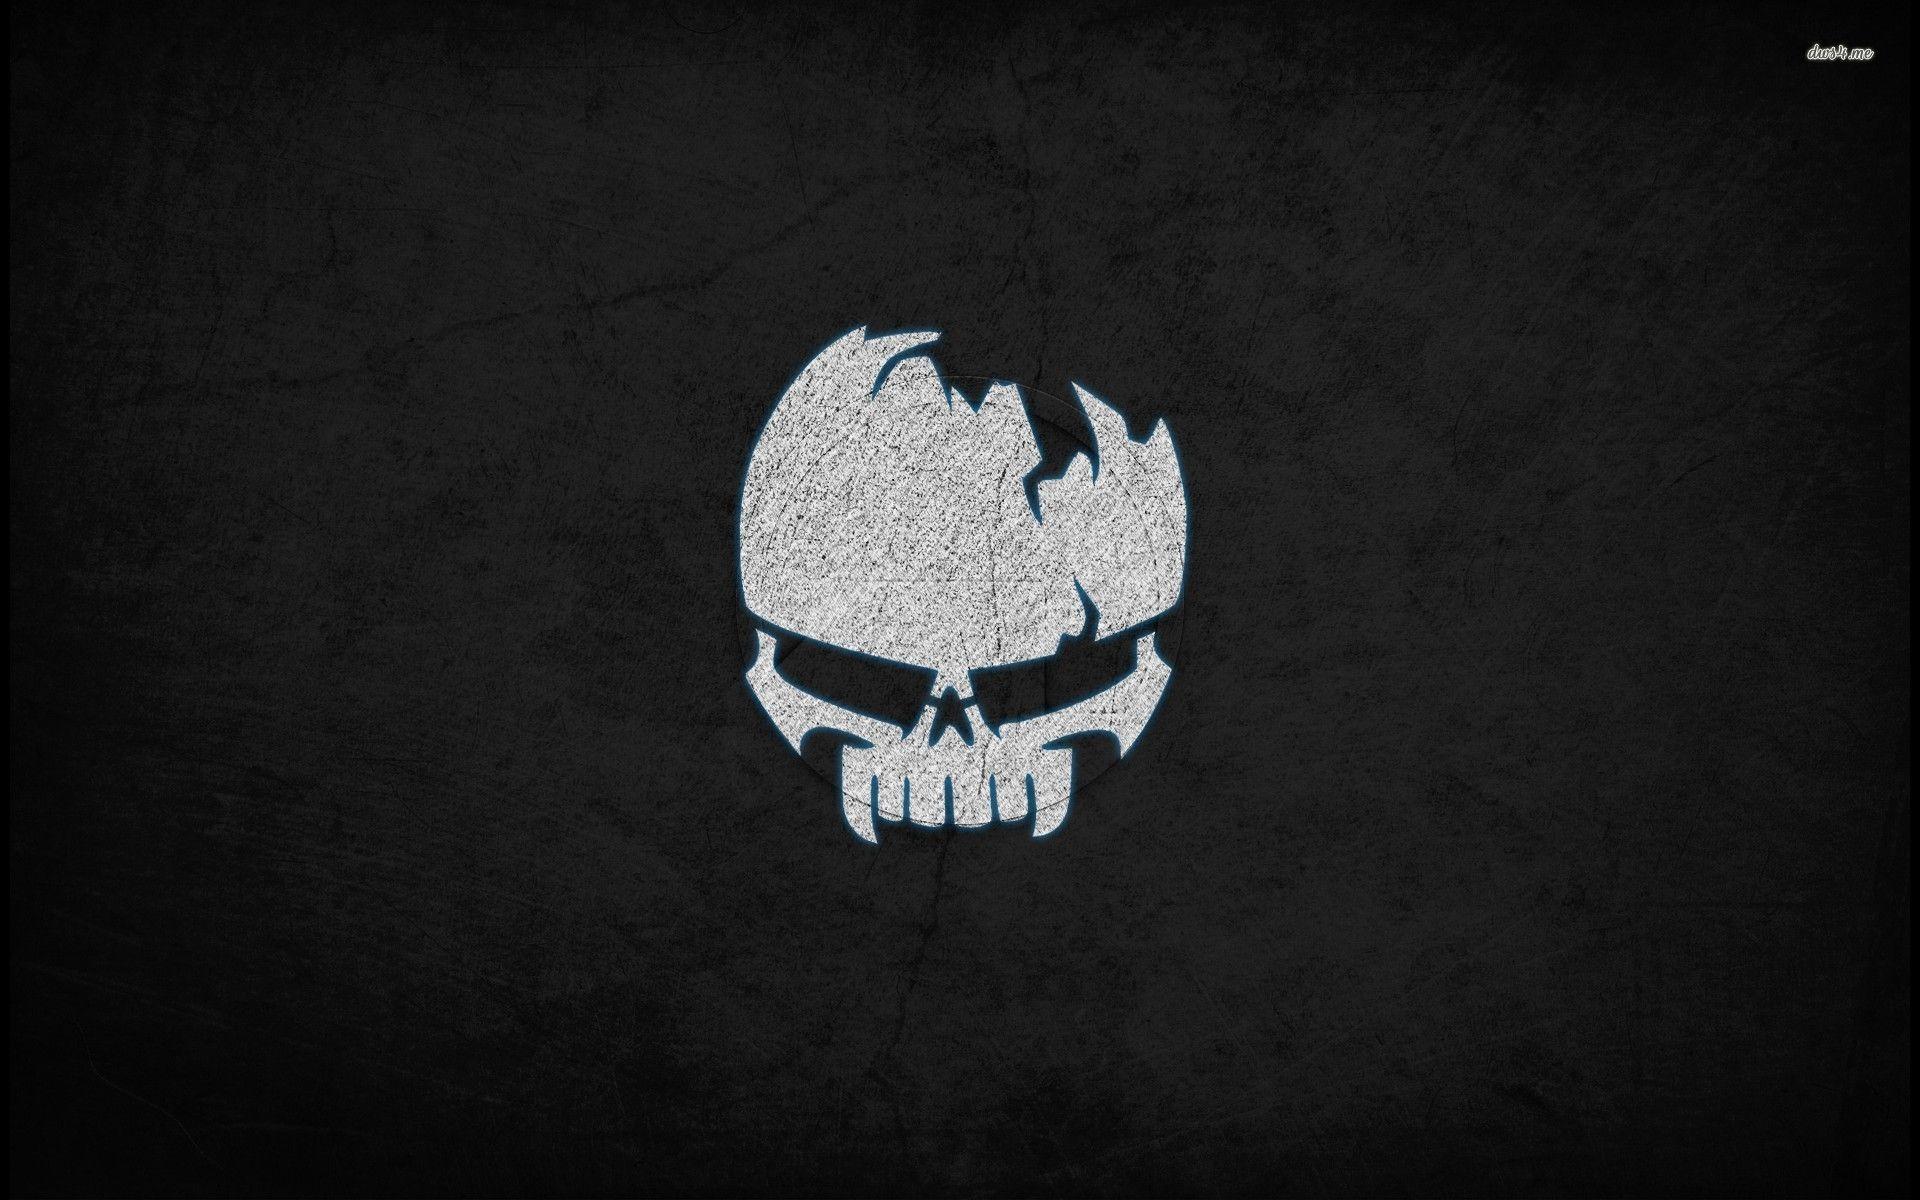 HD Skull Wallpapers 1080p - Wallpaper Cave 3d Skull Wallpaper Hd